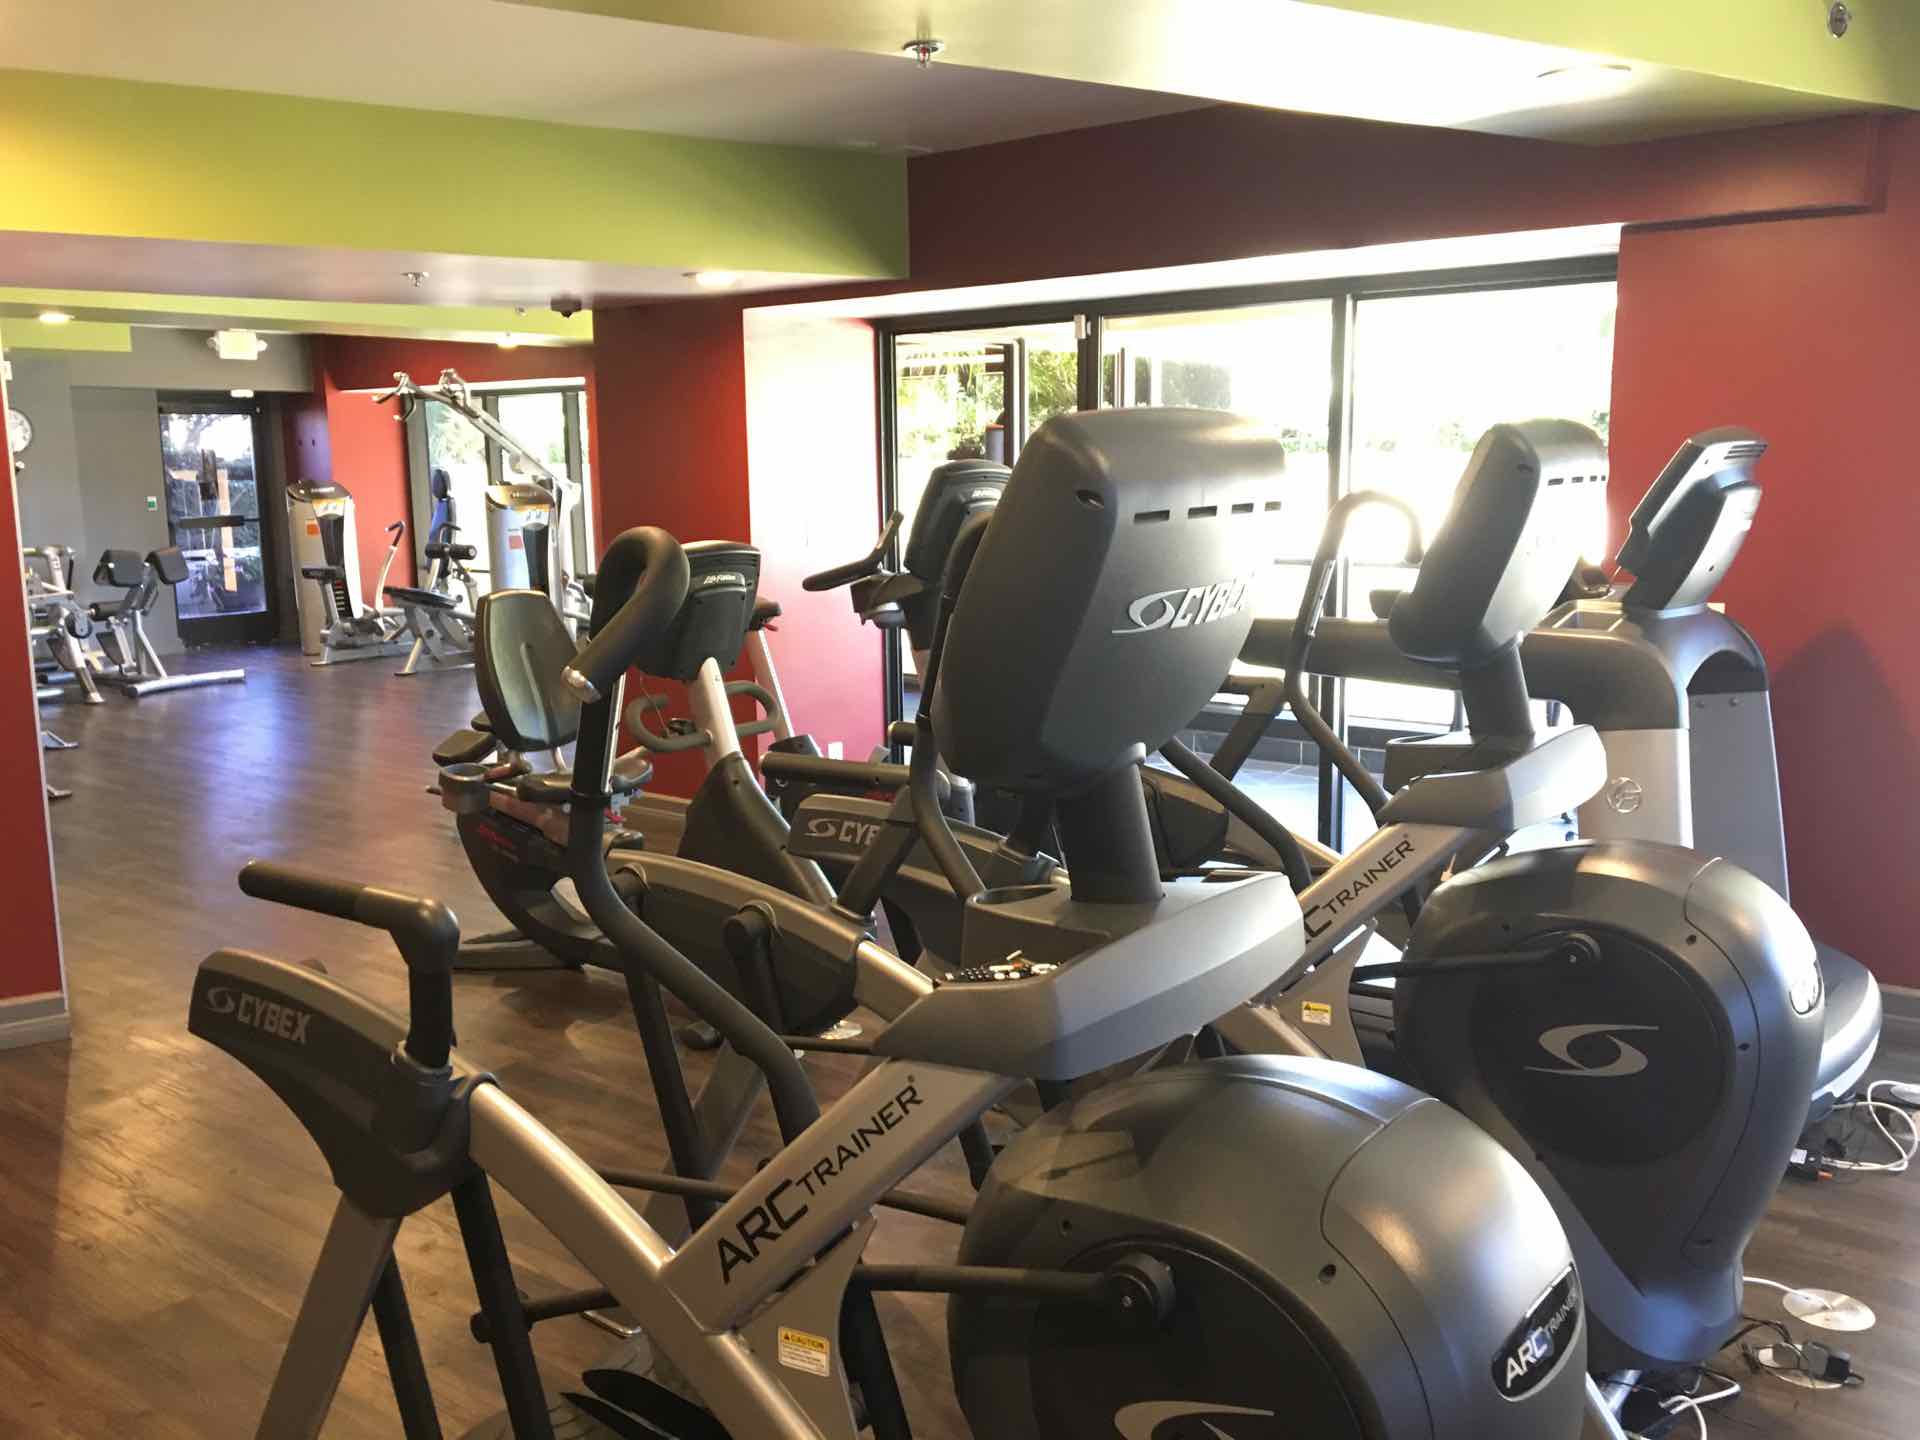 Fitness center amenity at Harbor Club